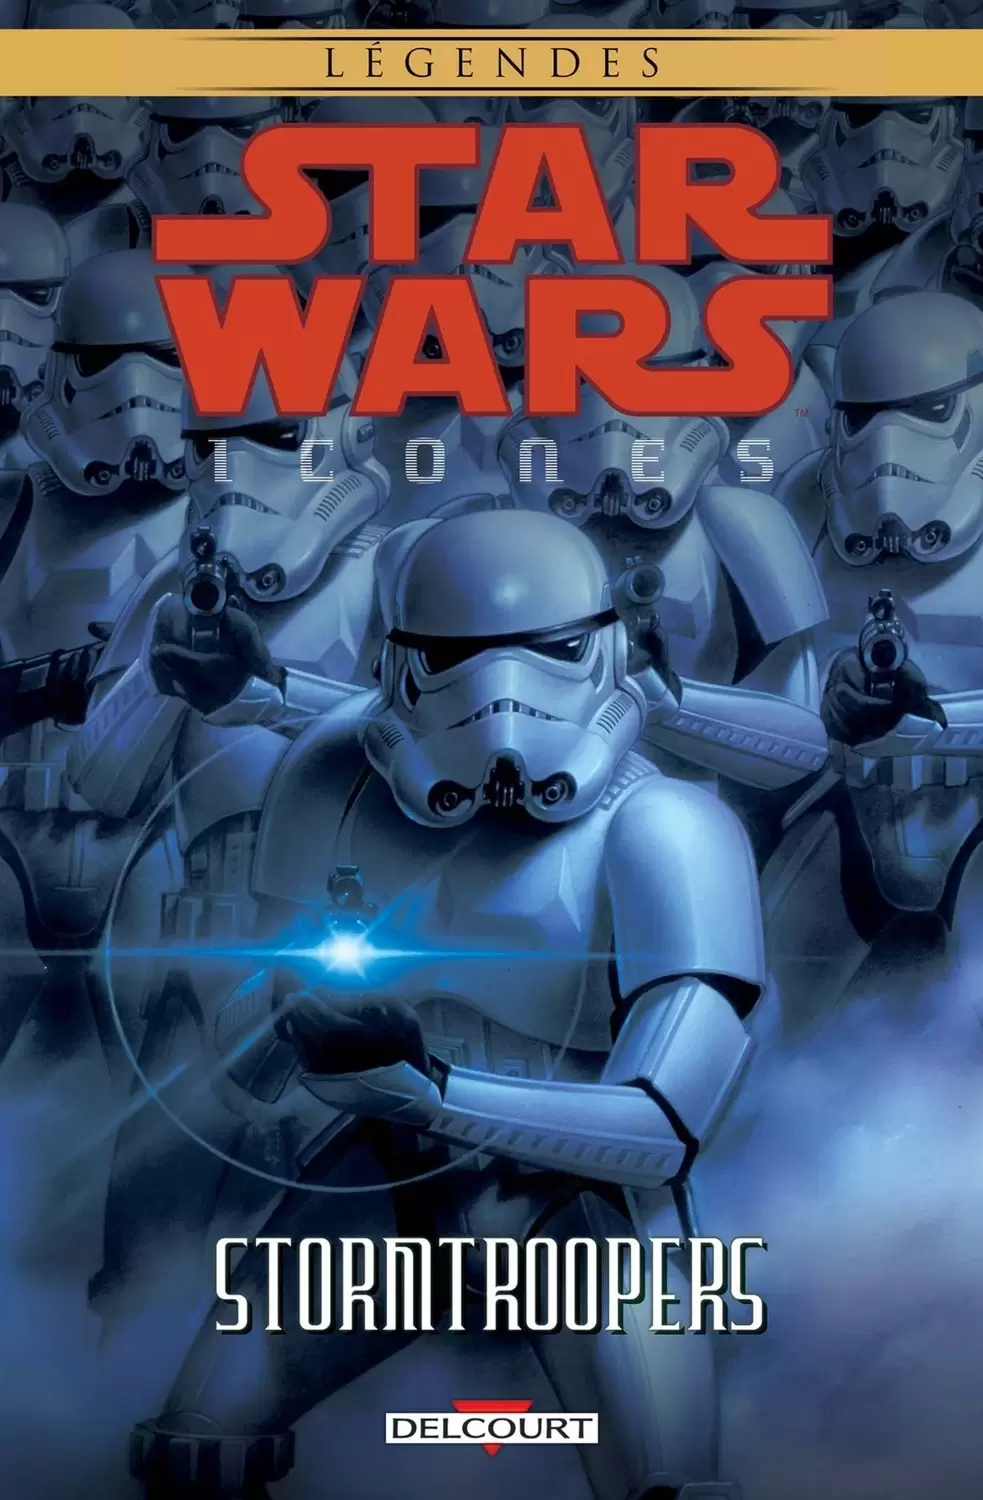 Star Wars - Icones - Stormtroopers